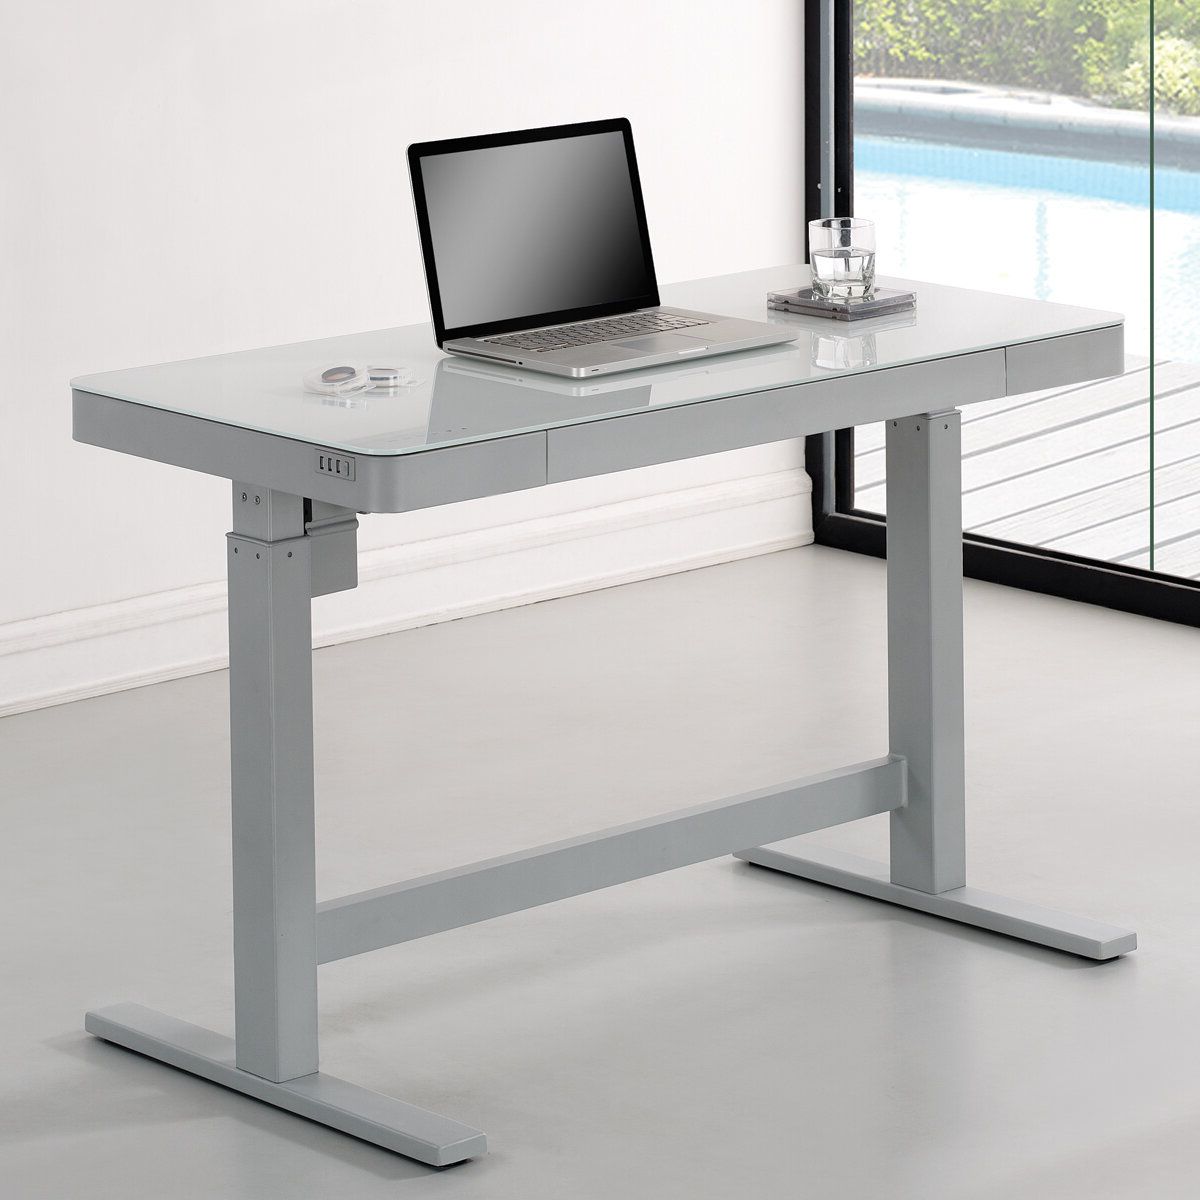 Cherry Adjustable Stand Up Desks For Popular Wildon Home ® Adjustable Standing Desk & Reviews (View 13 of 15)